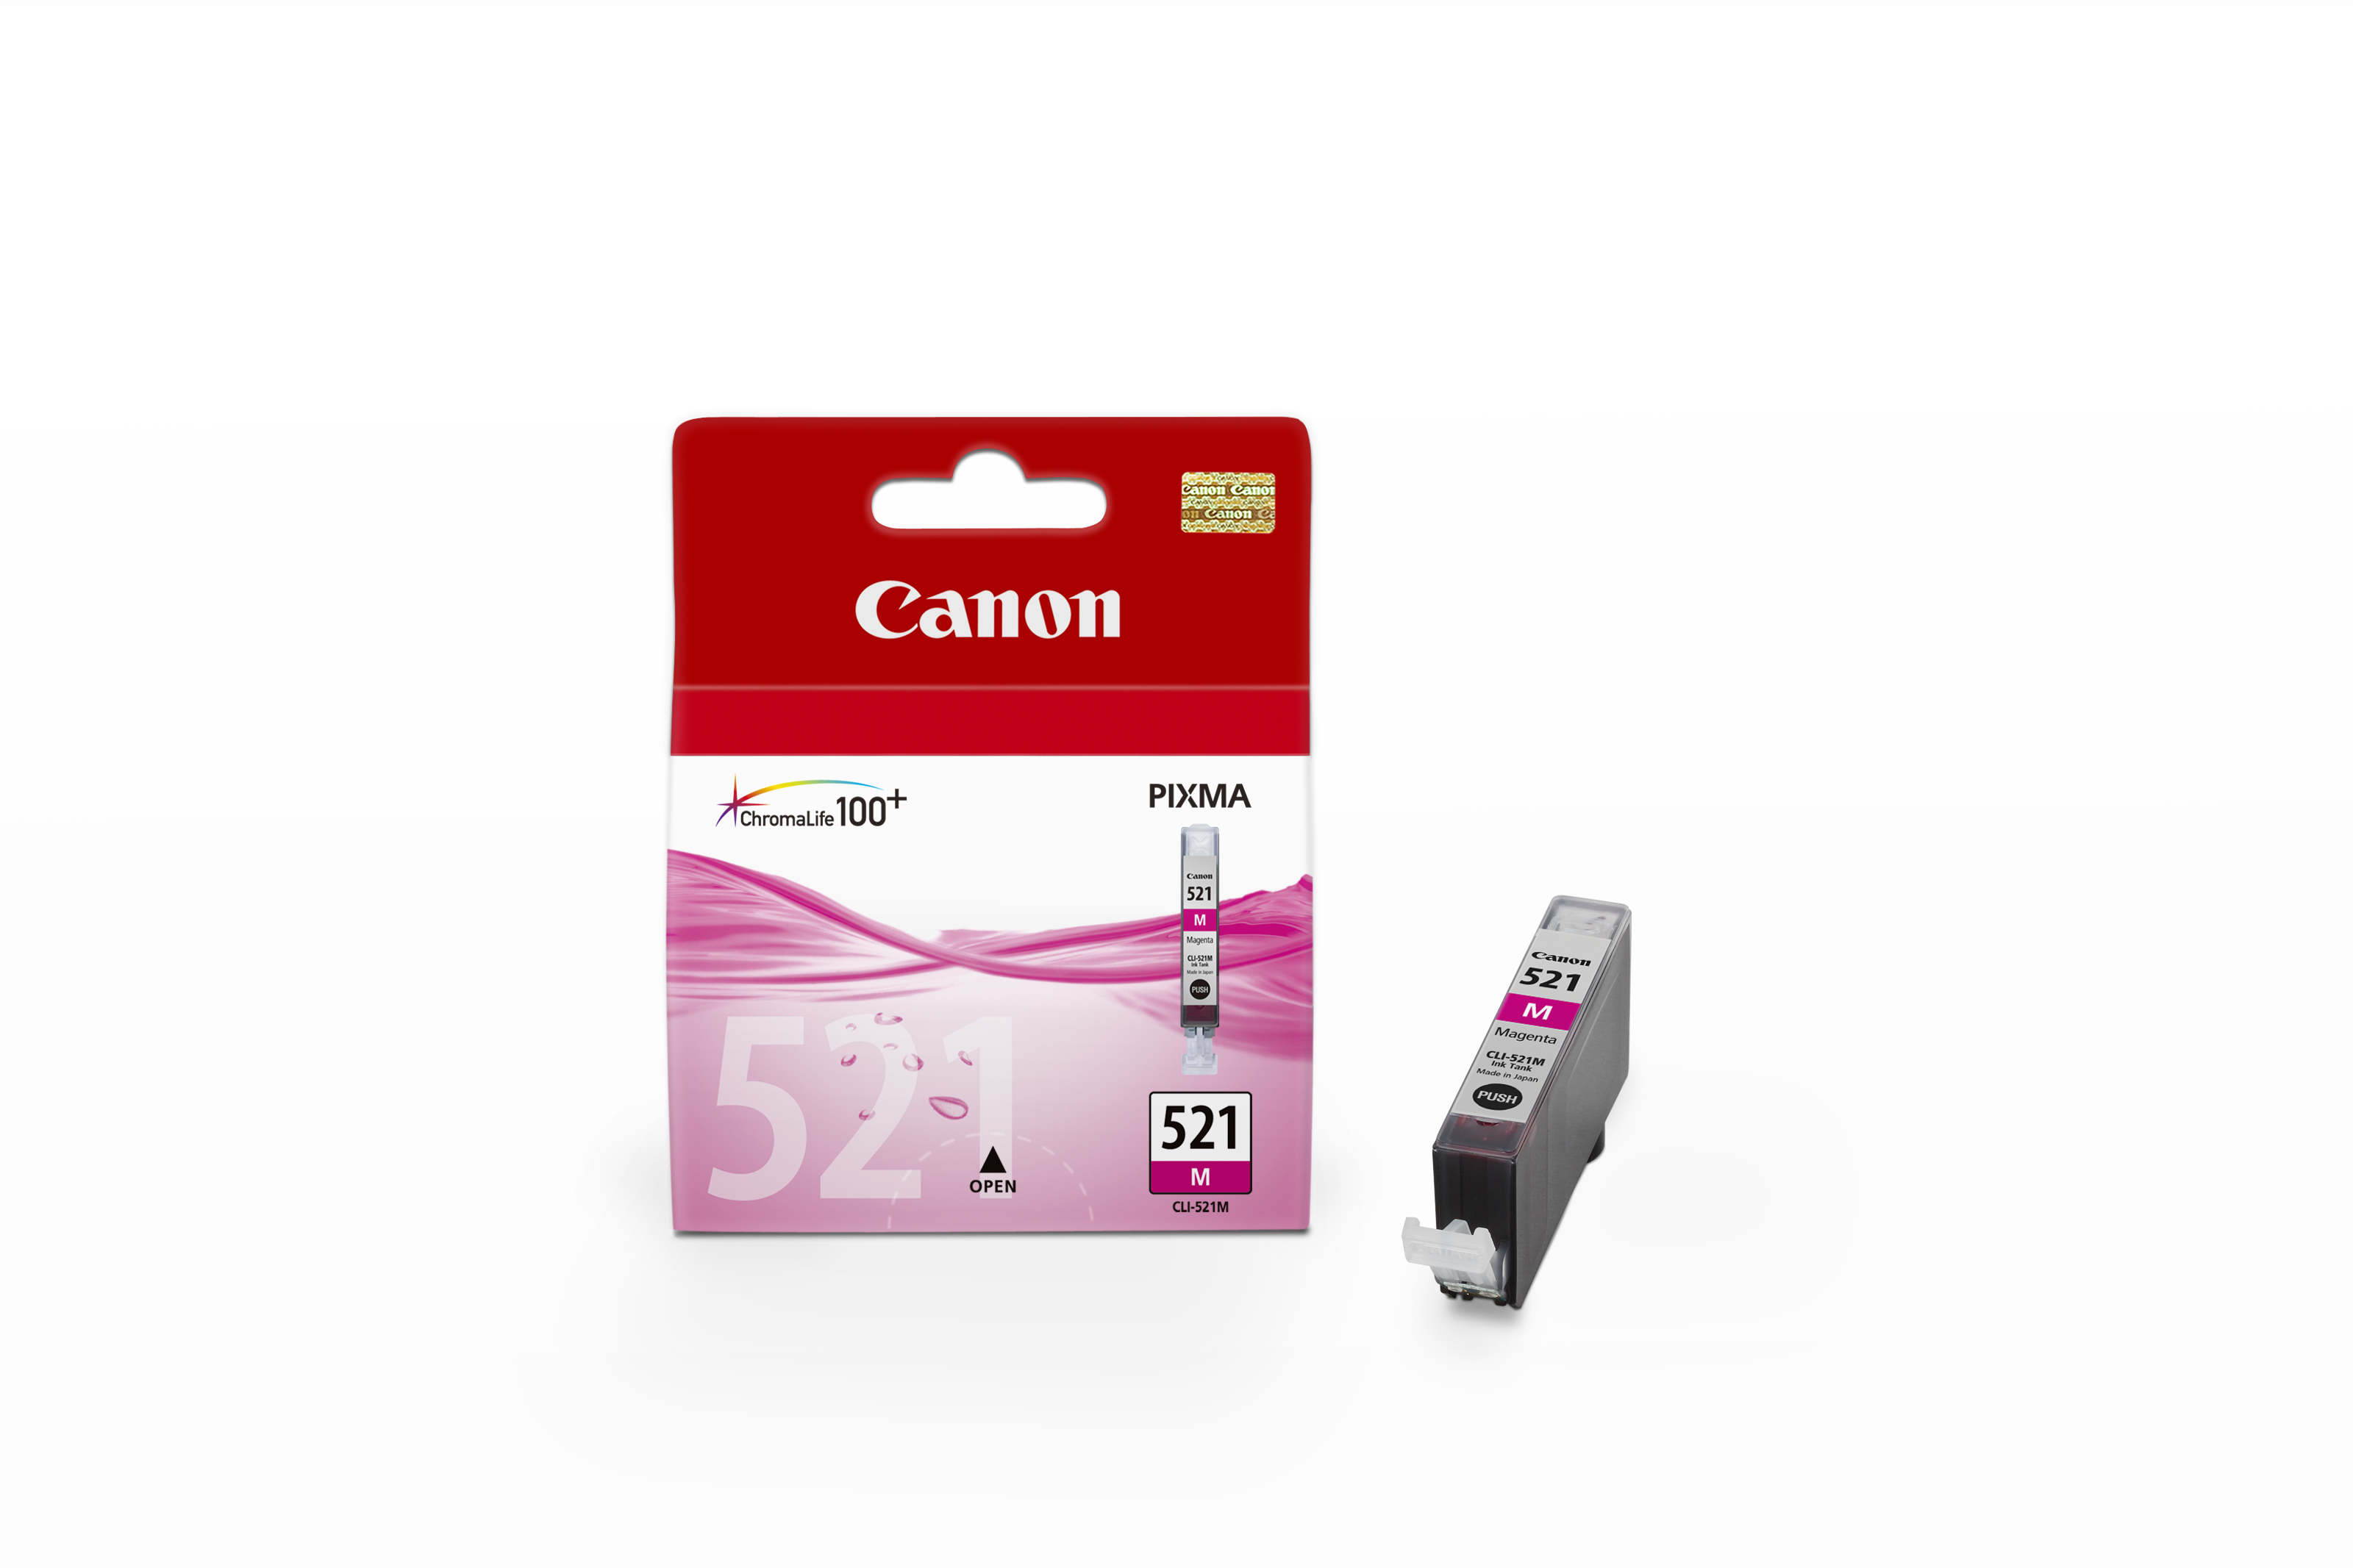 Canon PG-575/CL-576 2 Ink Cartridge & Photo Paper Value Pack - 5438C004  (Original)